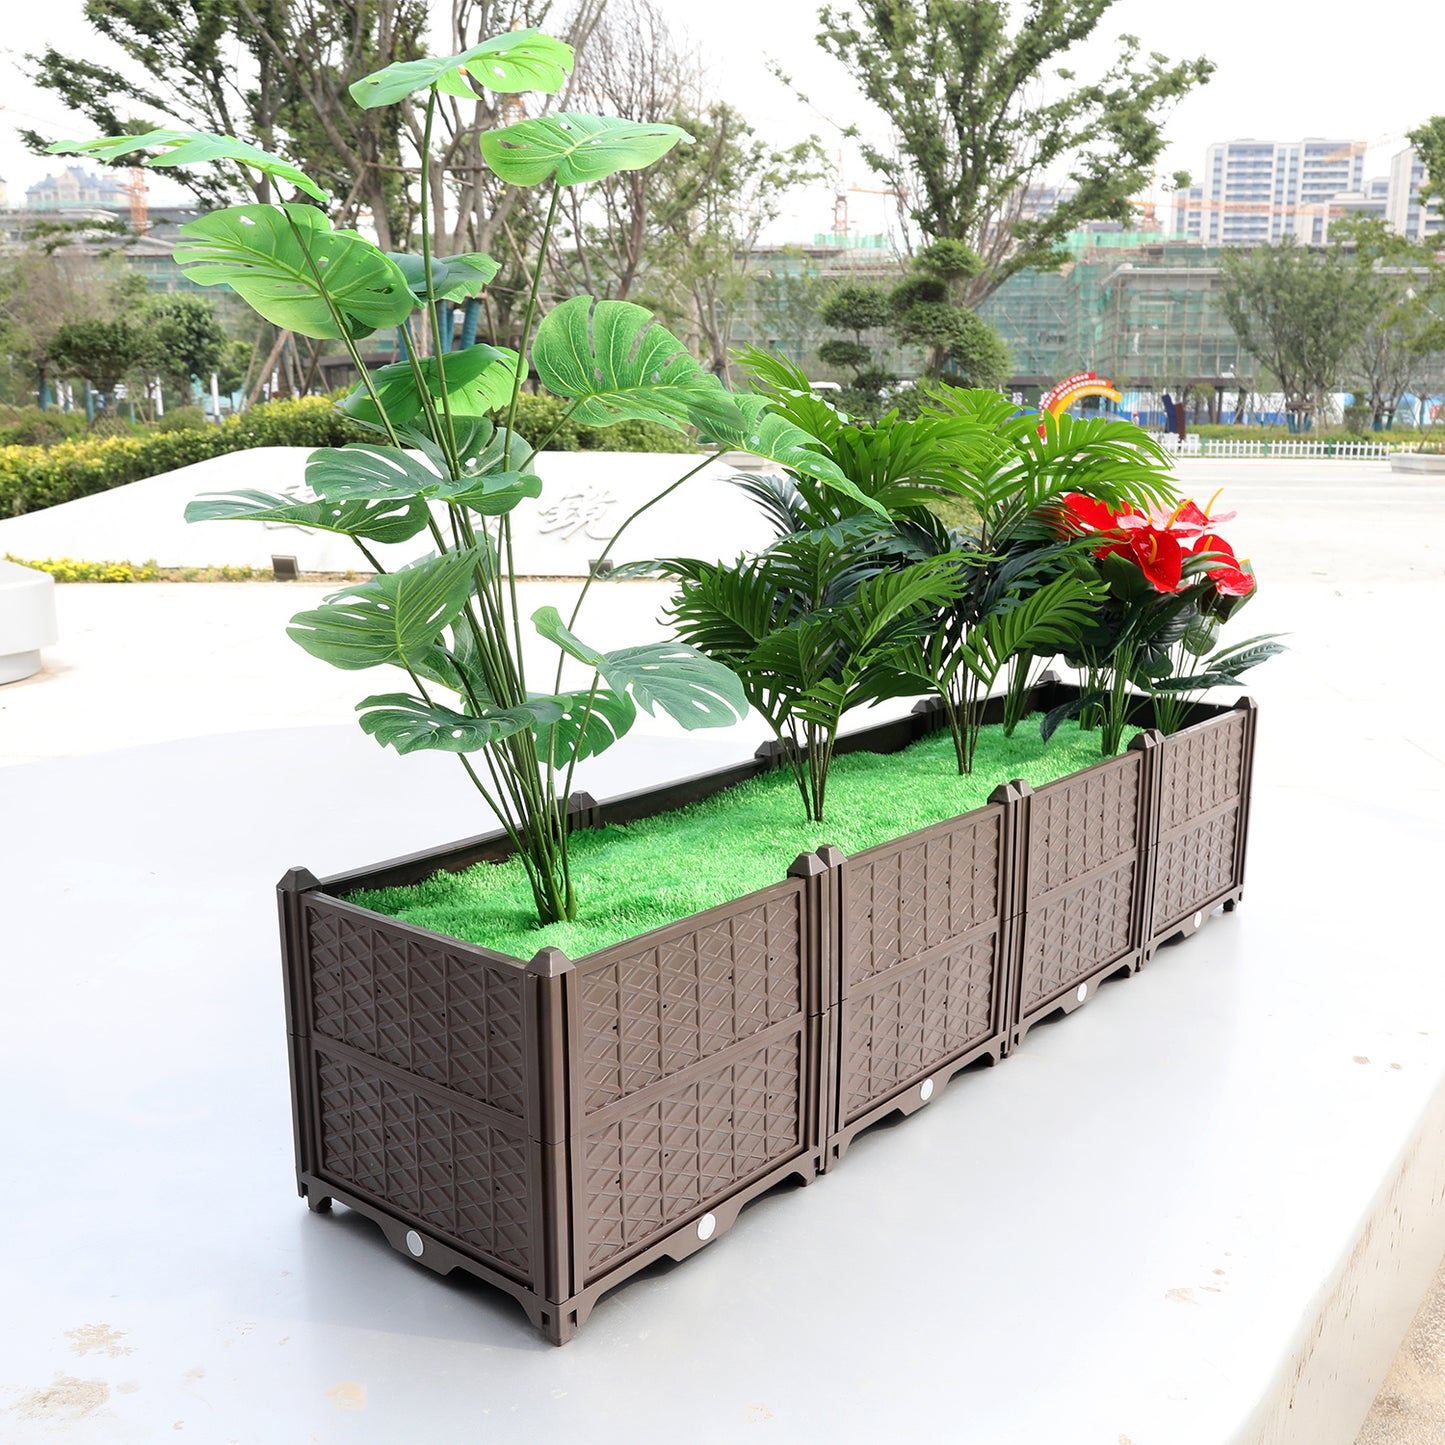 Rectangular Raised Garden Bed Kit Indoor Outdoor Plastic Planter Grow Box for Fresh Vegetables, Herbs, Flowers & Succulents, Brown